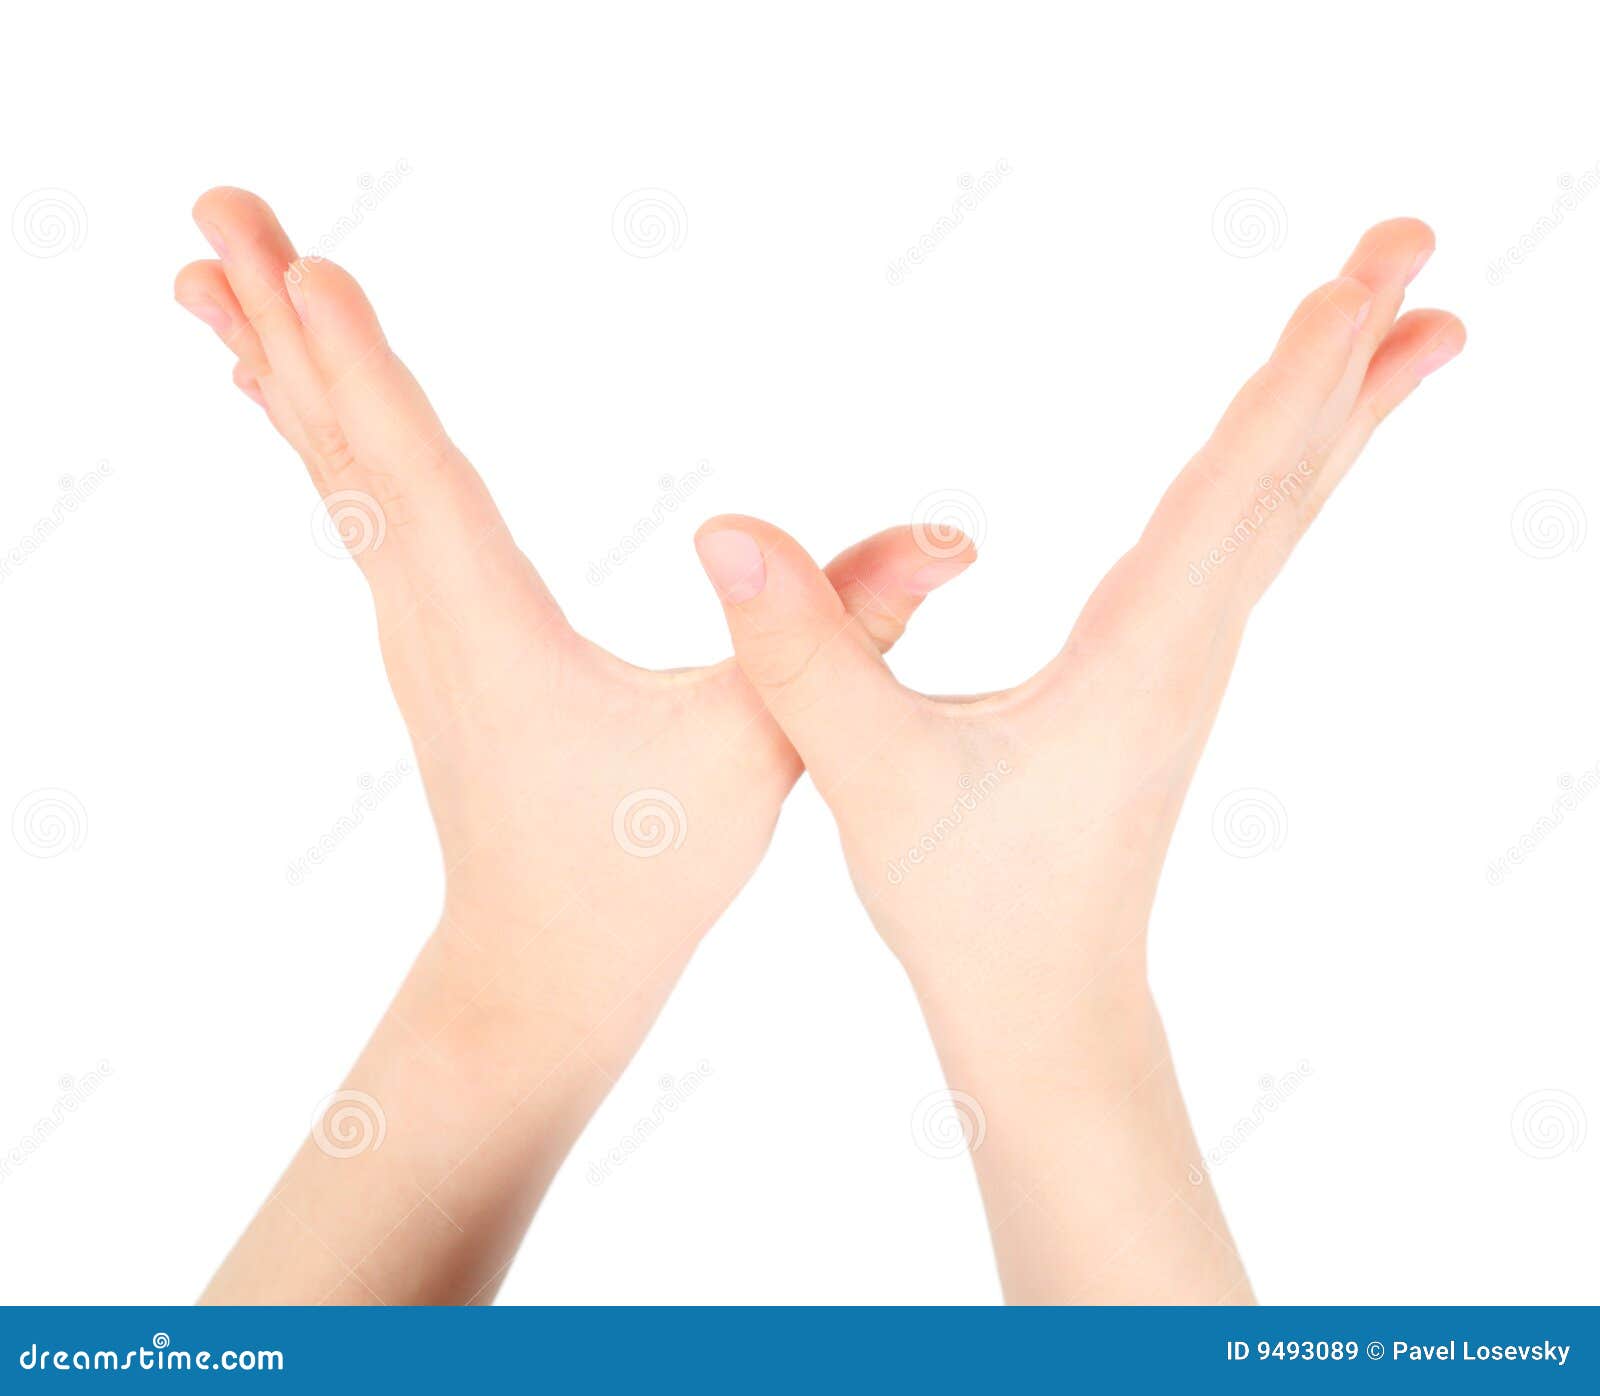 hands-represents-letter-w-alphabet-9493089.jpg